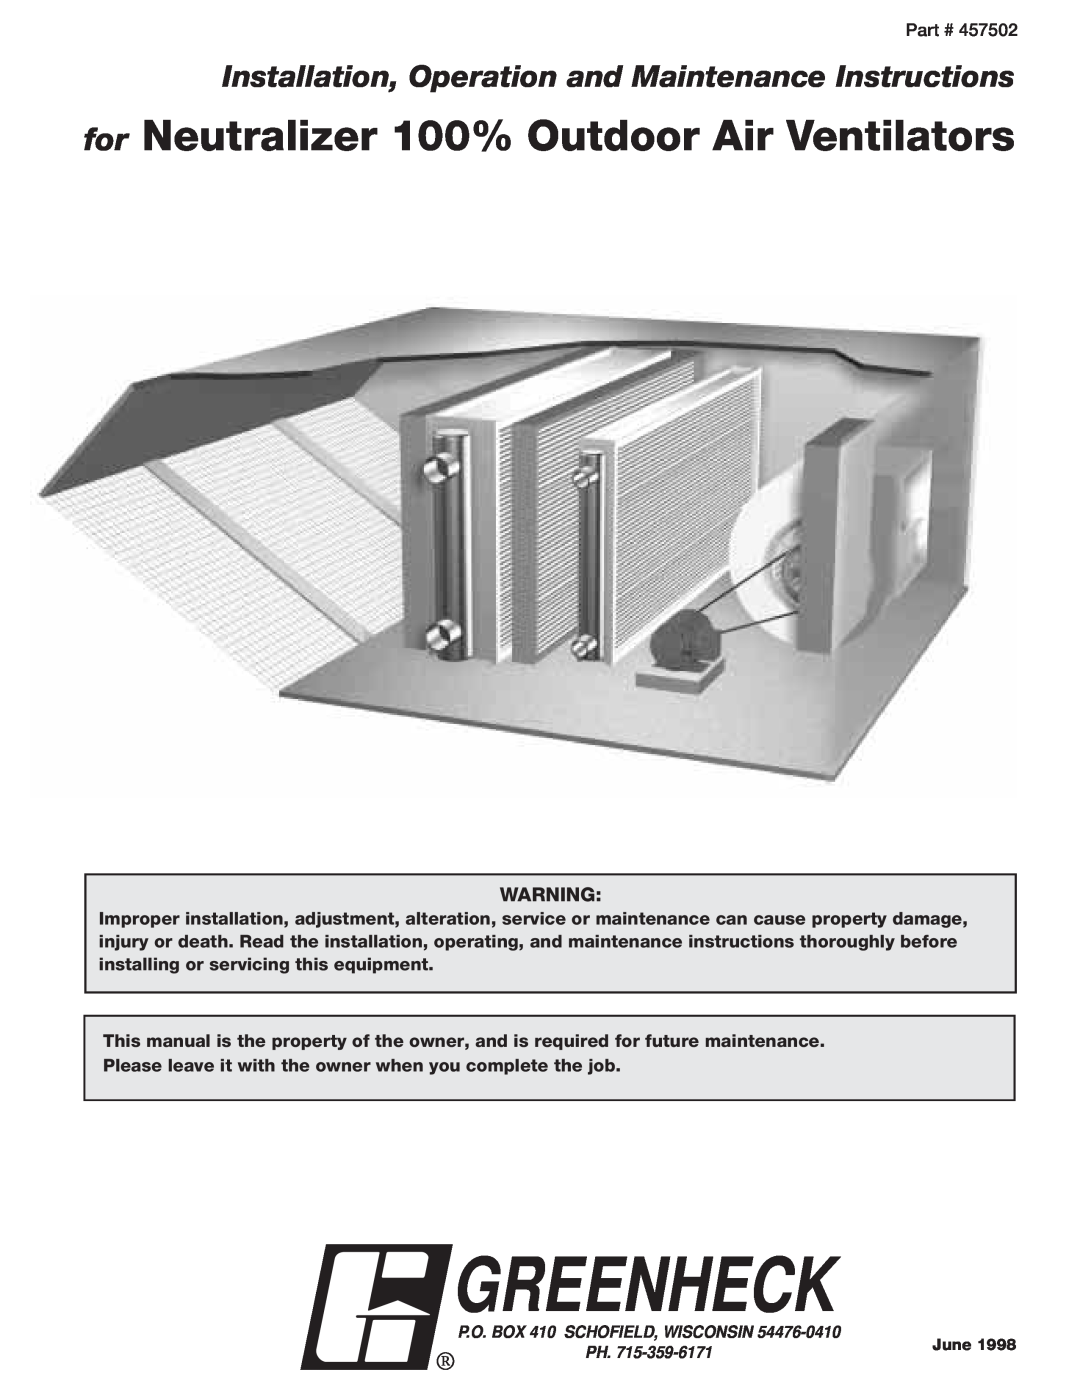 Greenheck Fan manual Greenheck, for Neutralizer 100% Outdoor Air Ventilators, P.O. BOX 410 SCHOFIELD, WISCONSIN 